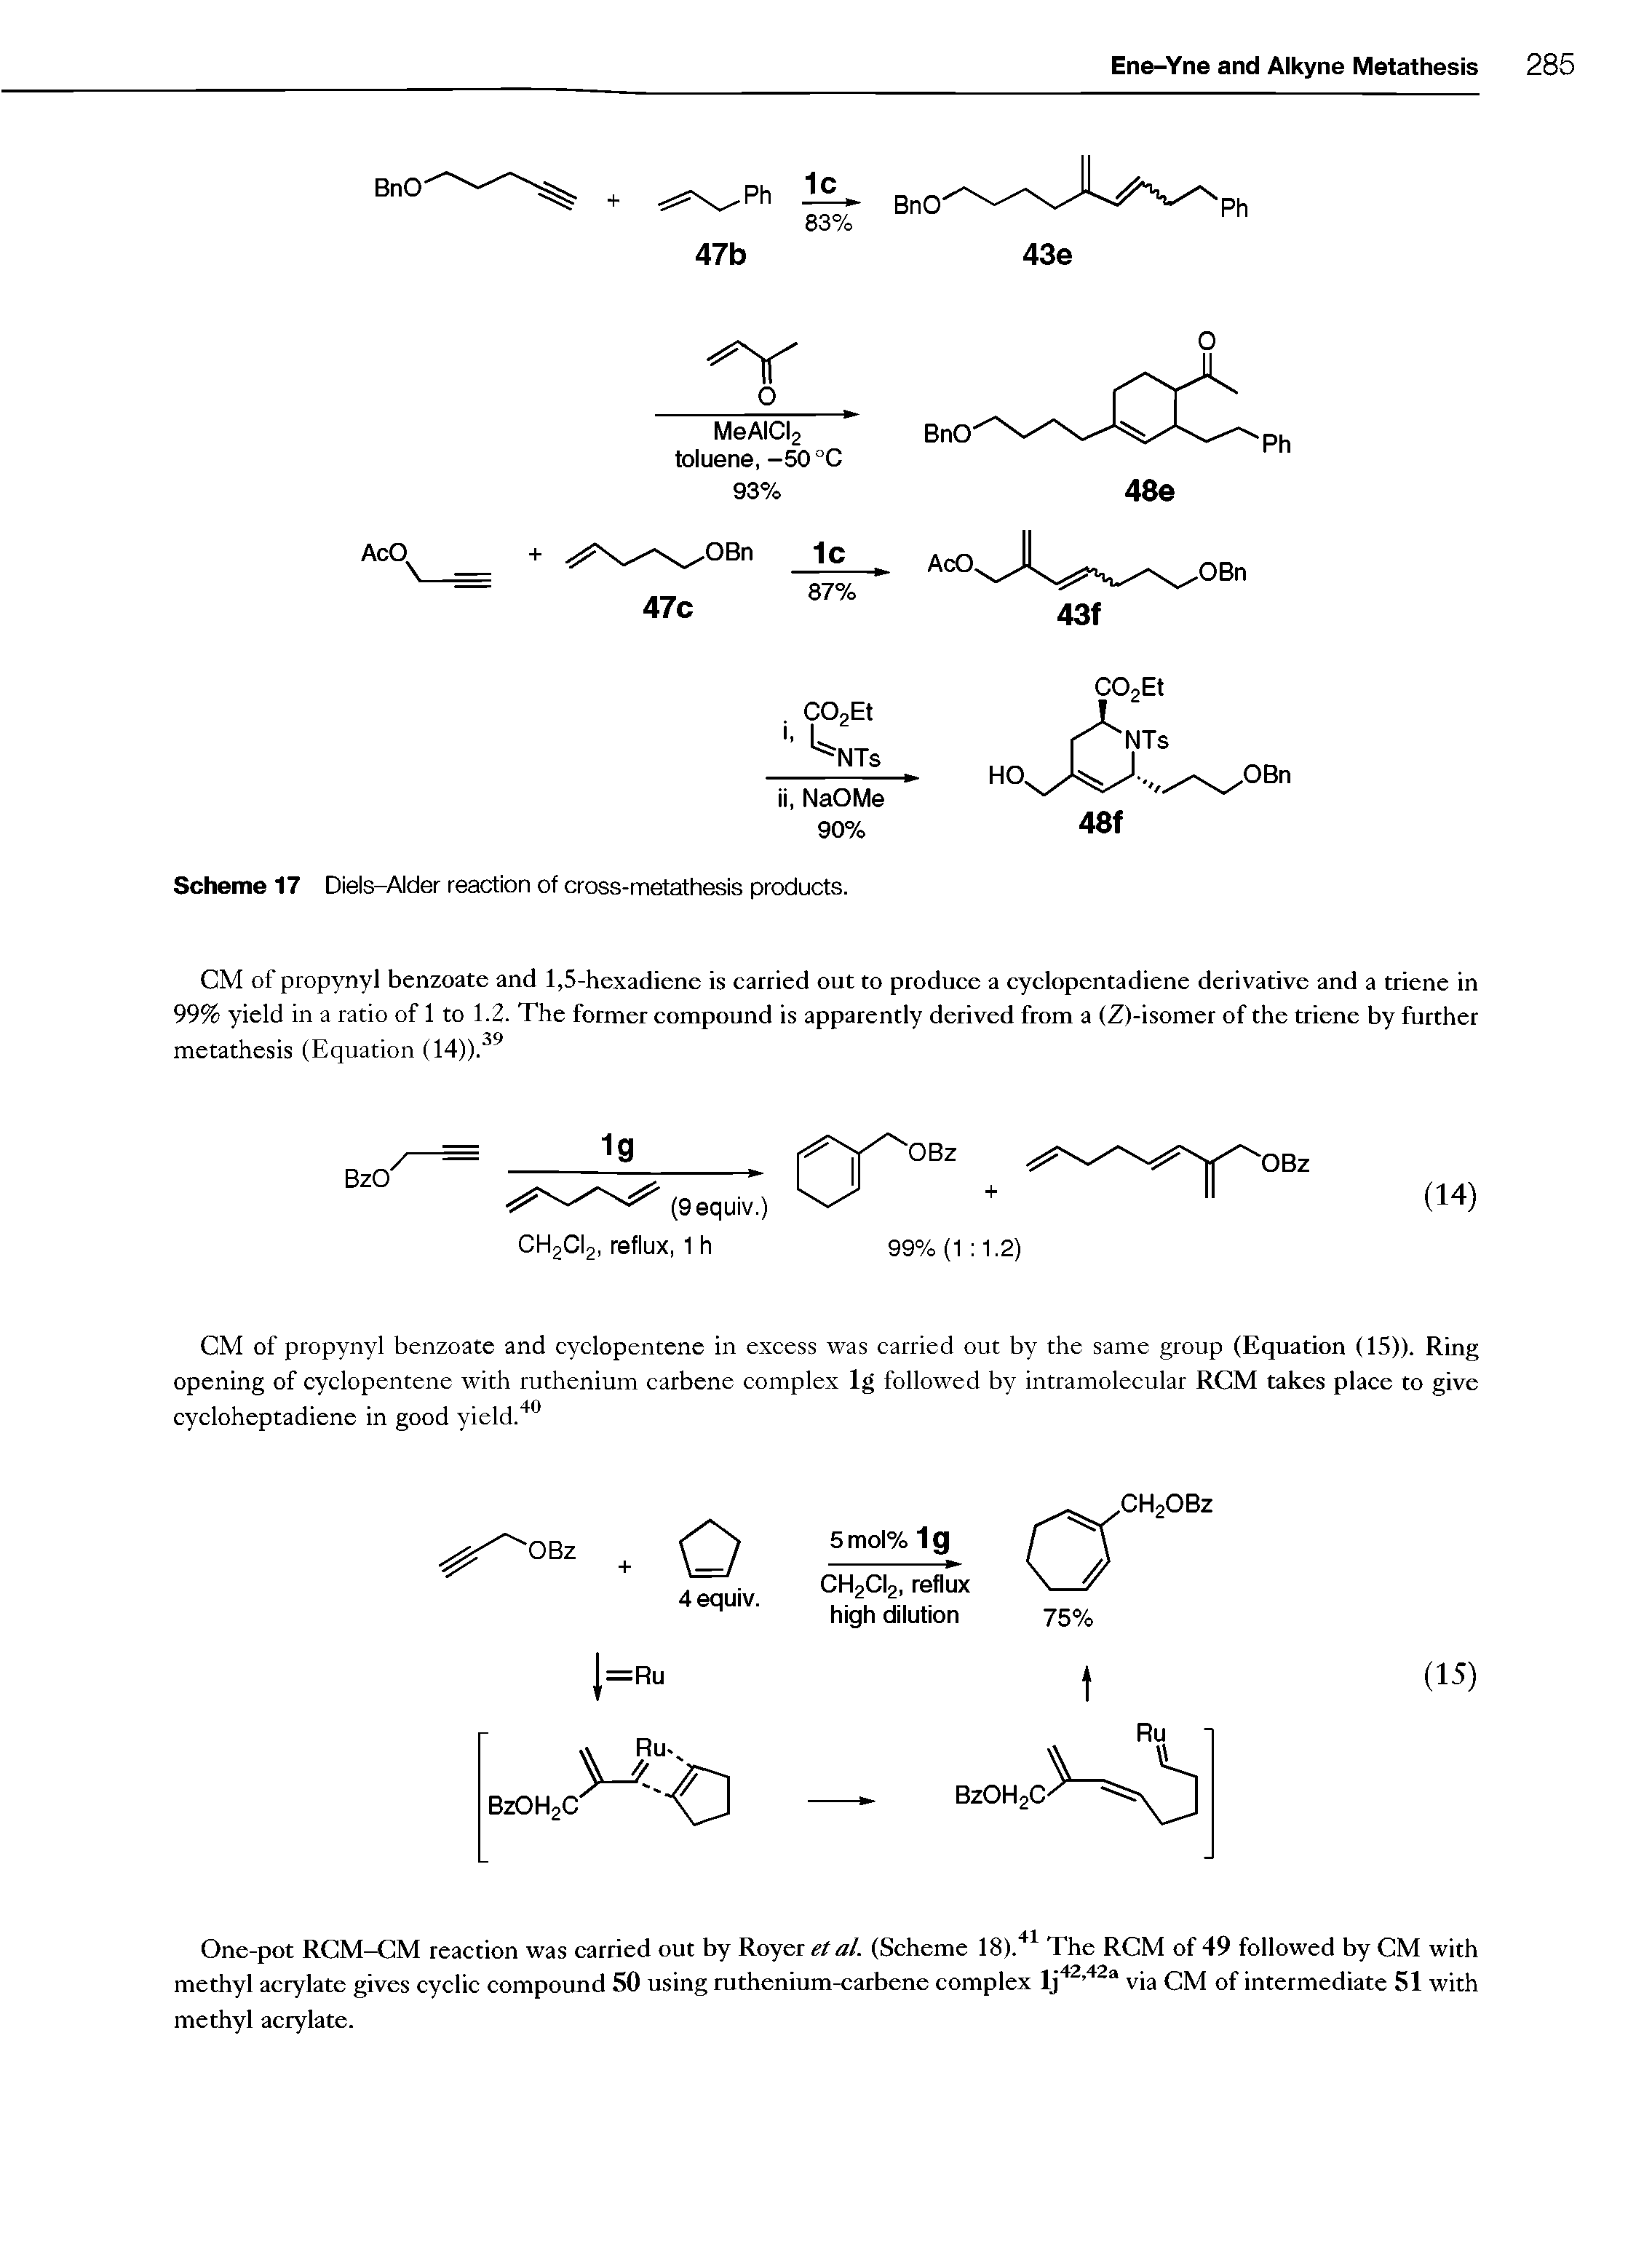 Scheme 17 Diels-Alder reaction of cross-metathesis products.